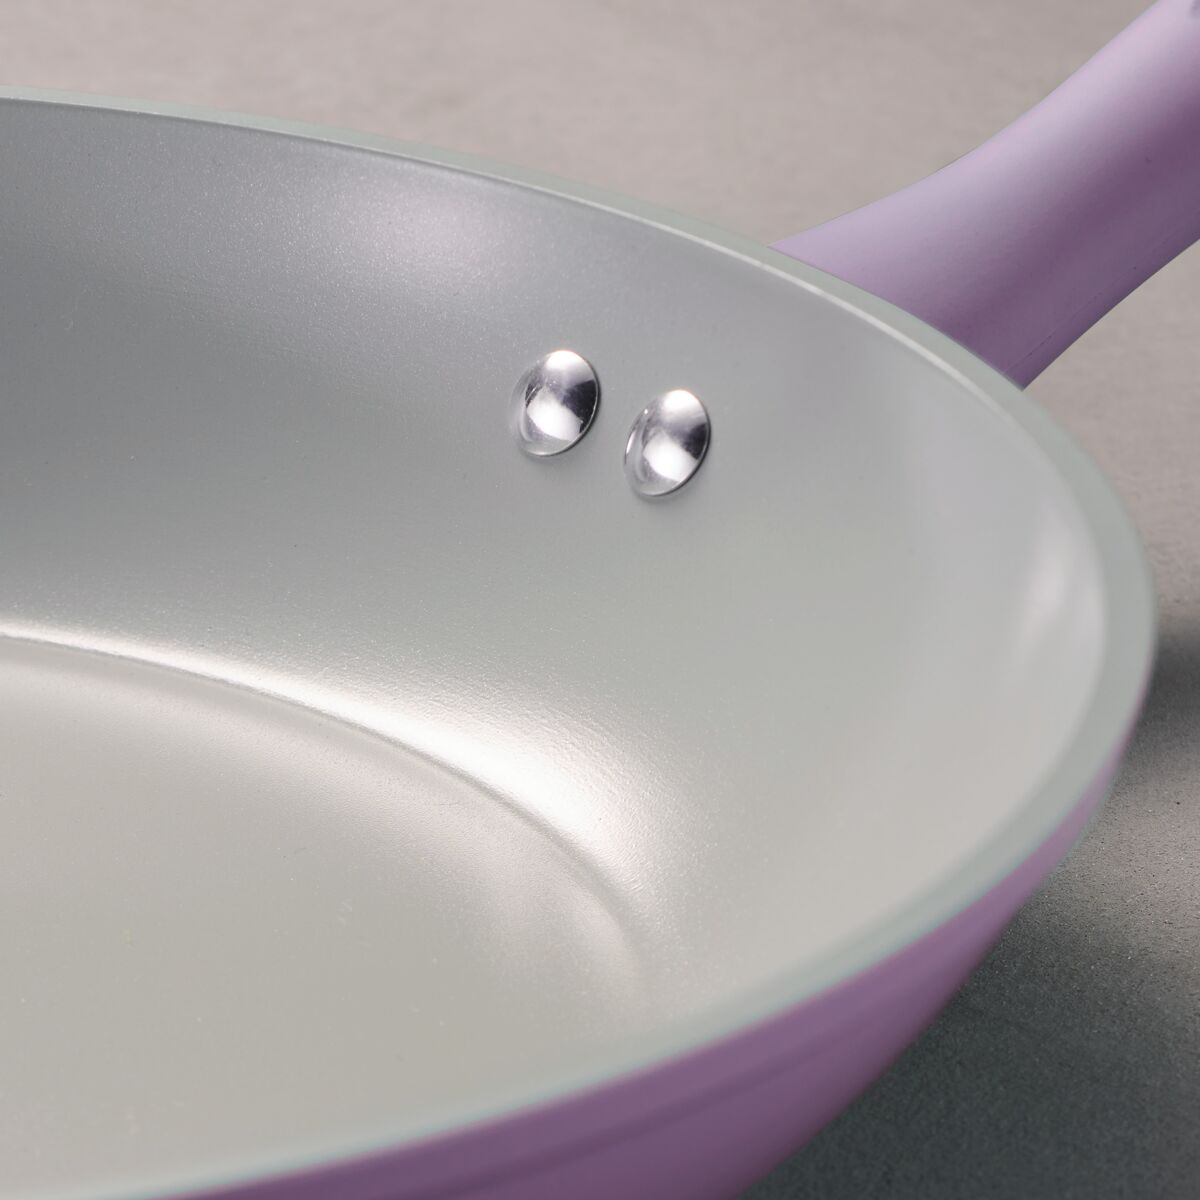 Tramontina Ceramic 14-Pc. Cookware Set, Purple